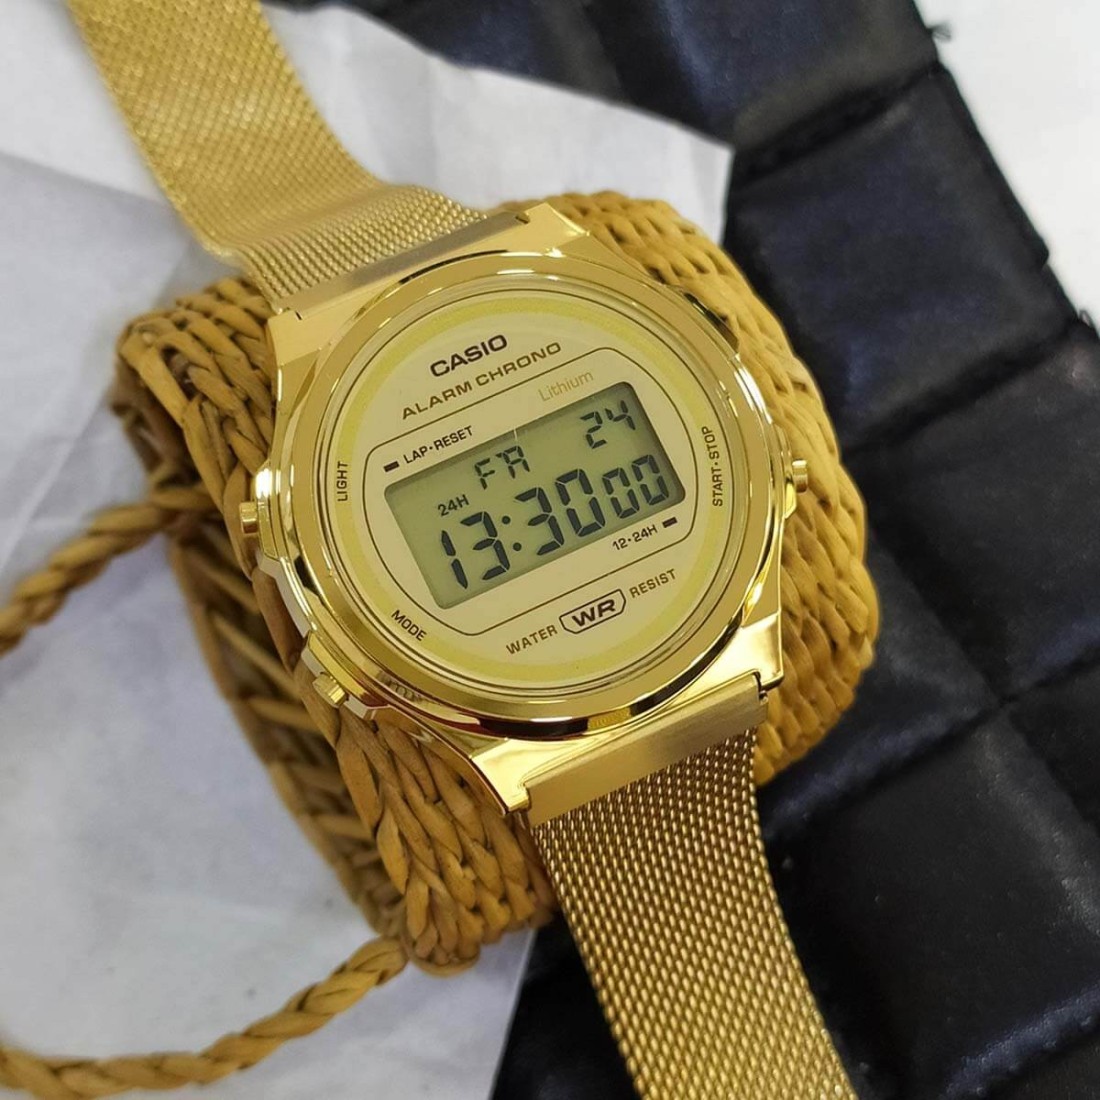 A171WEG-9AEF, Reloj Casio Vintage Redondo Dorado